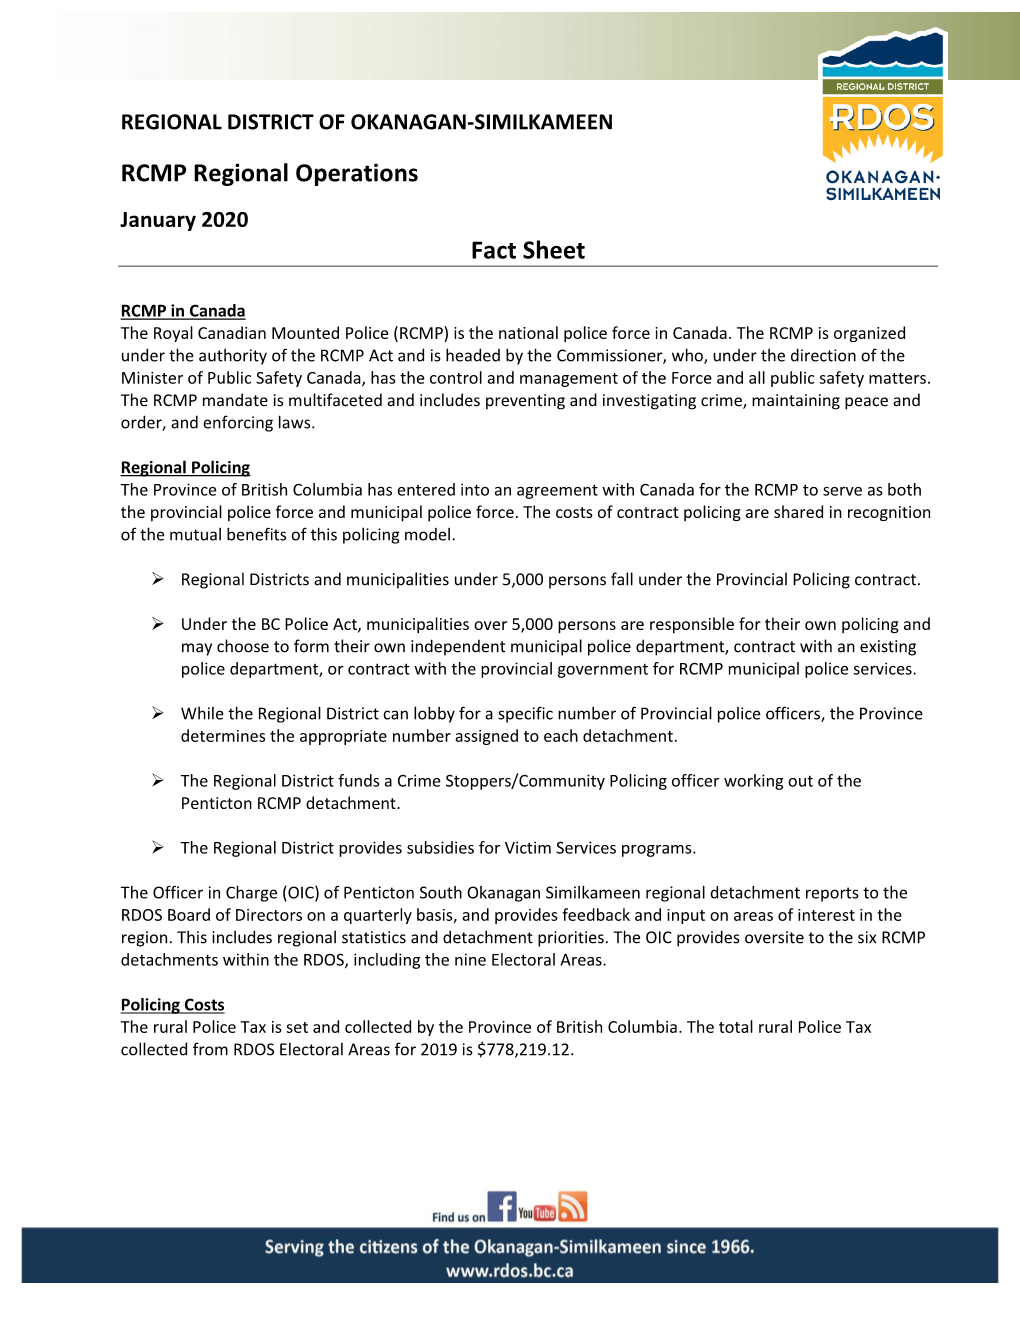 RCMP Regional Operations Fact Sheet